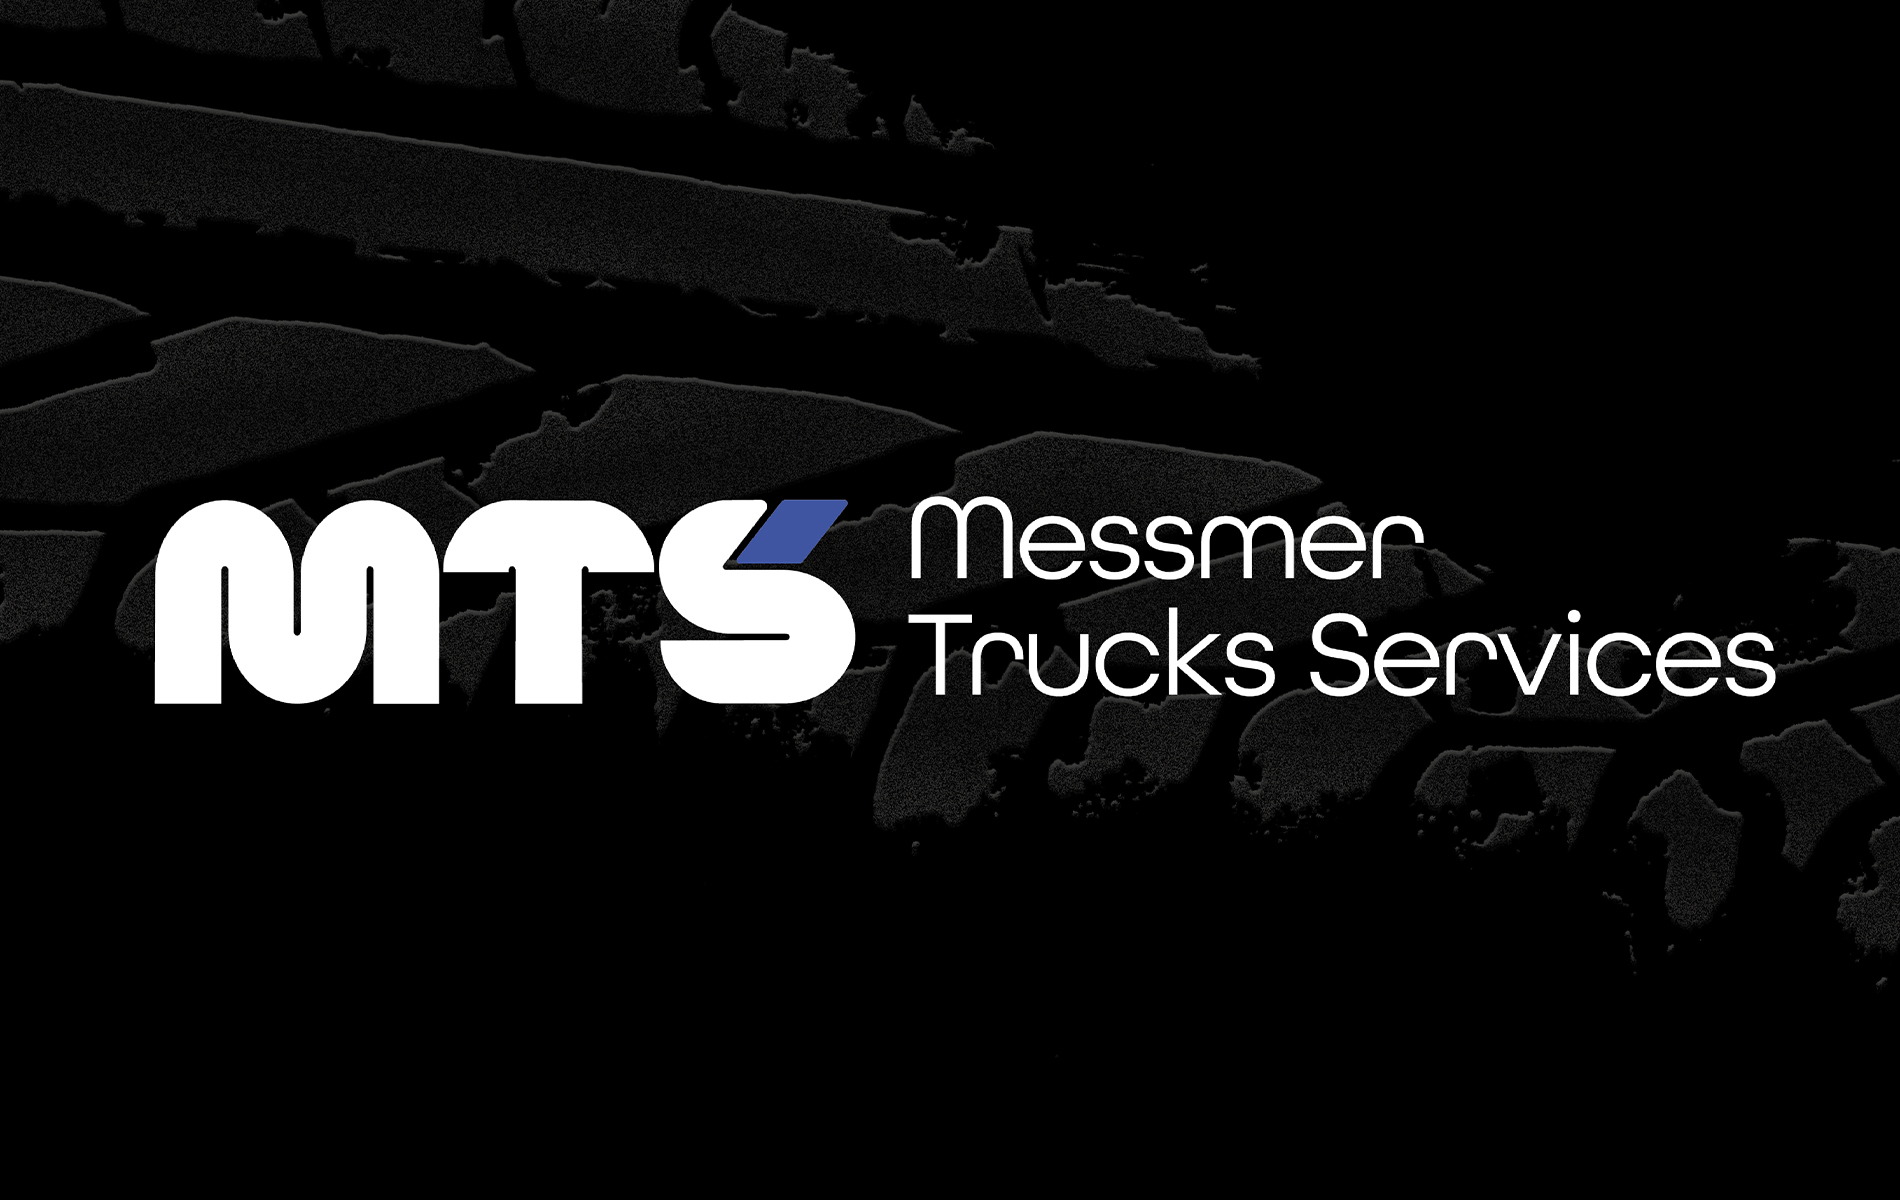 Visuel d'entreprise - Messmer Trucks Services